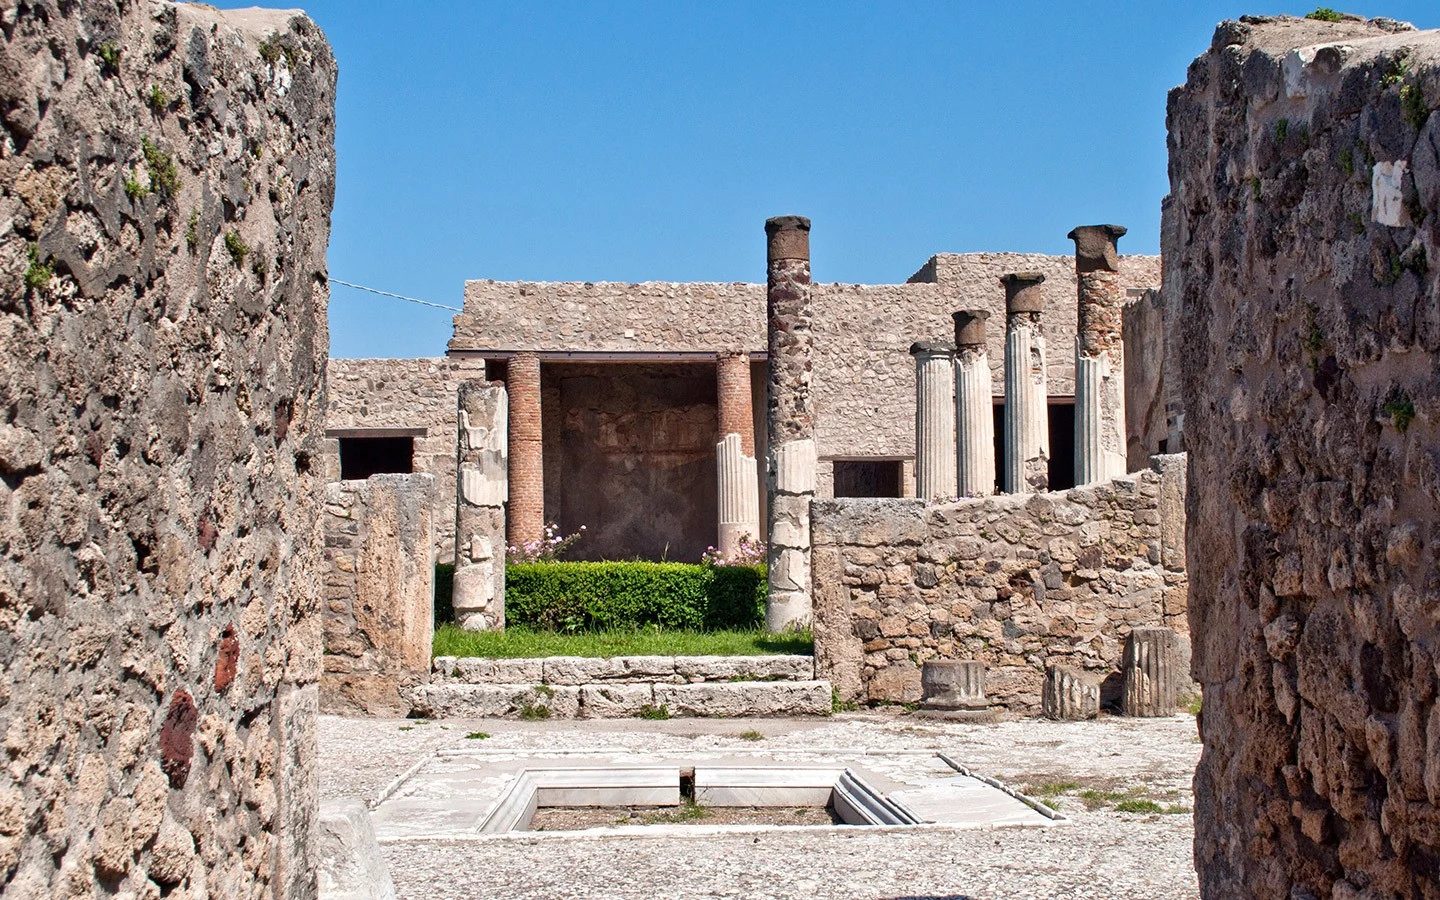 Villa at Pompeii archaeological site